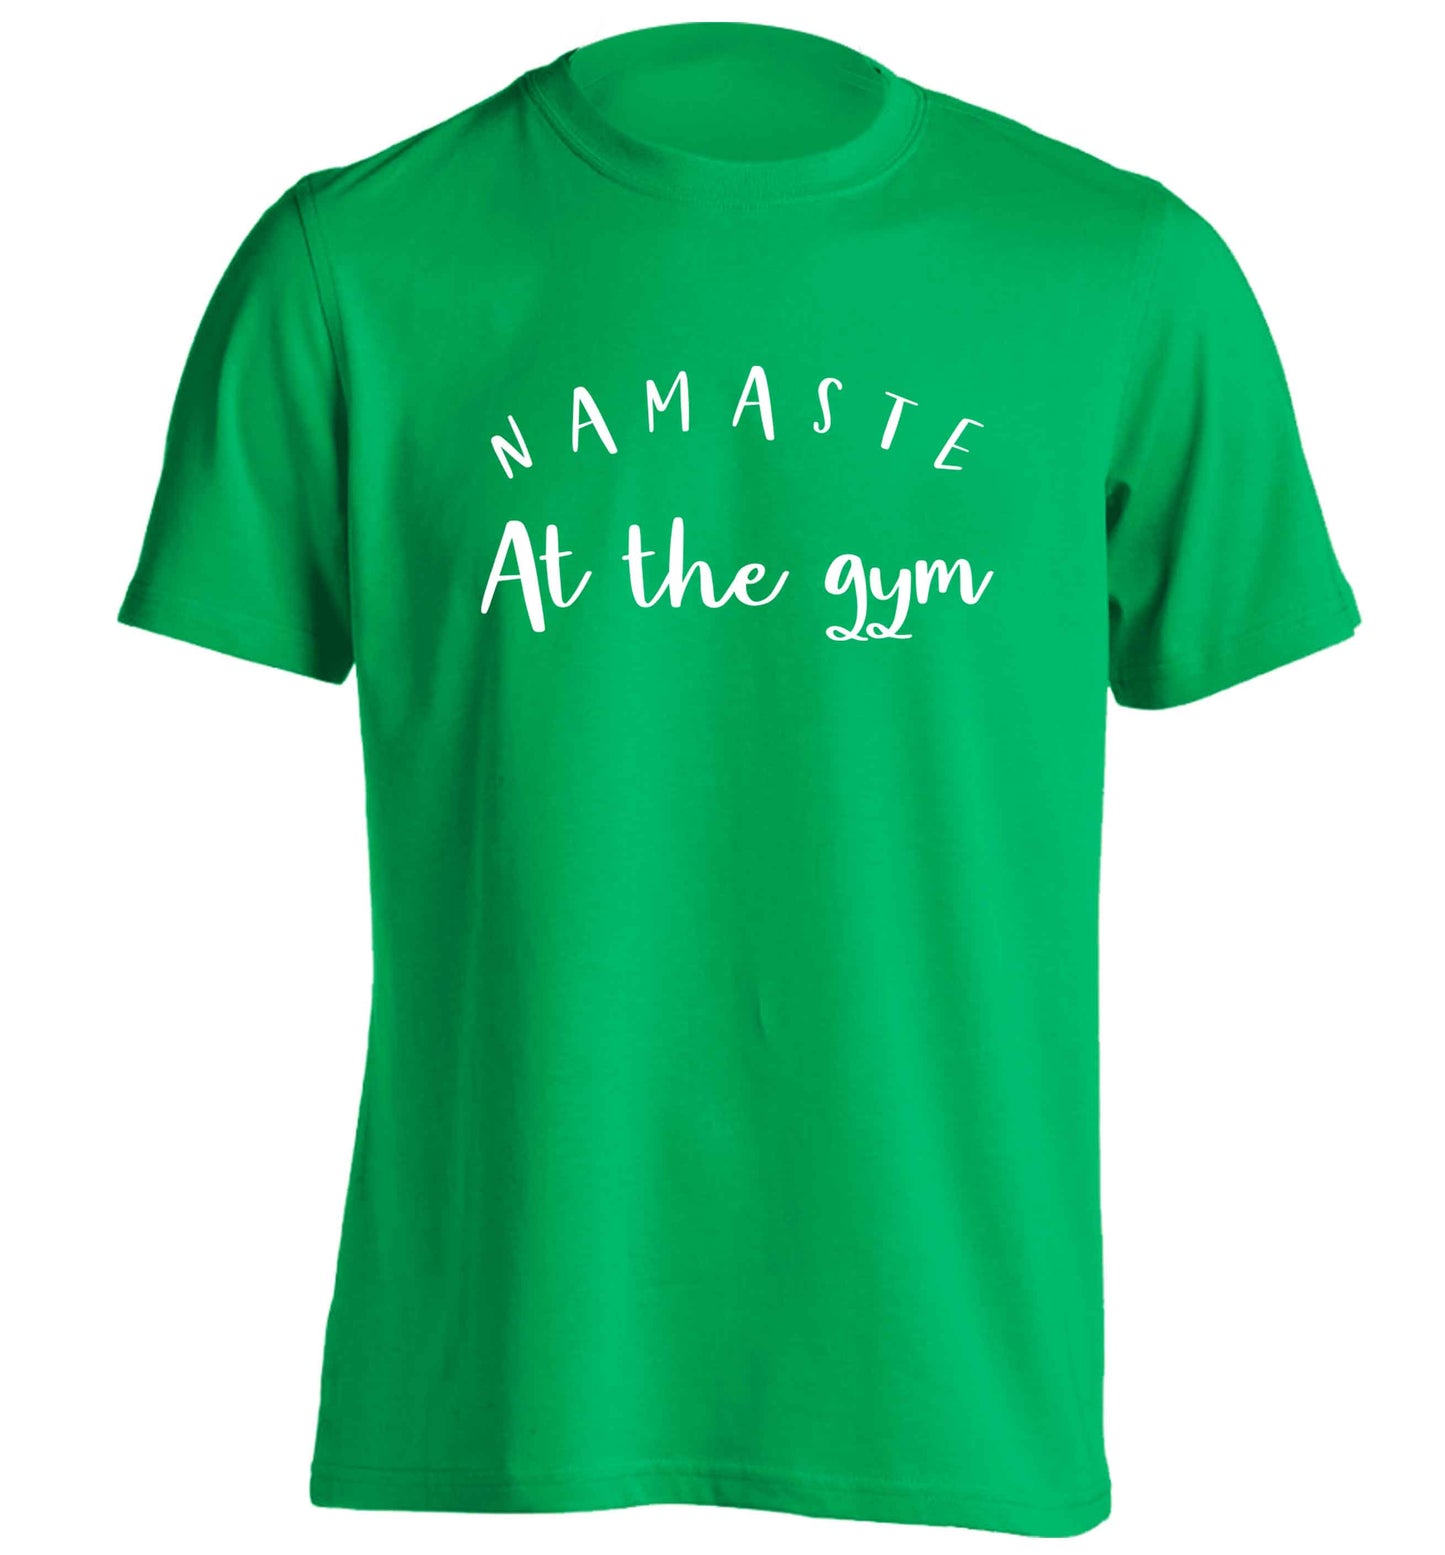 Namaste at the gym adults unisex green Tshirt 2XL